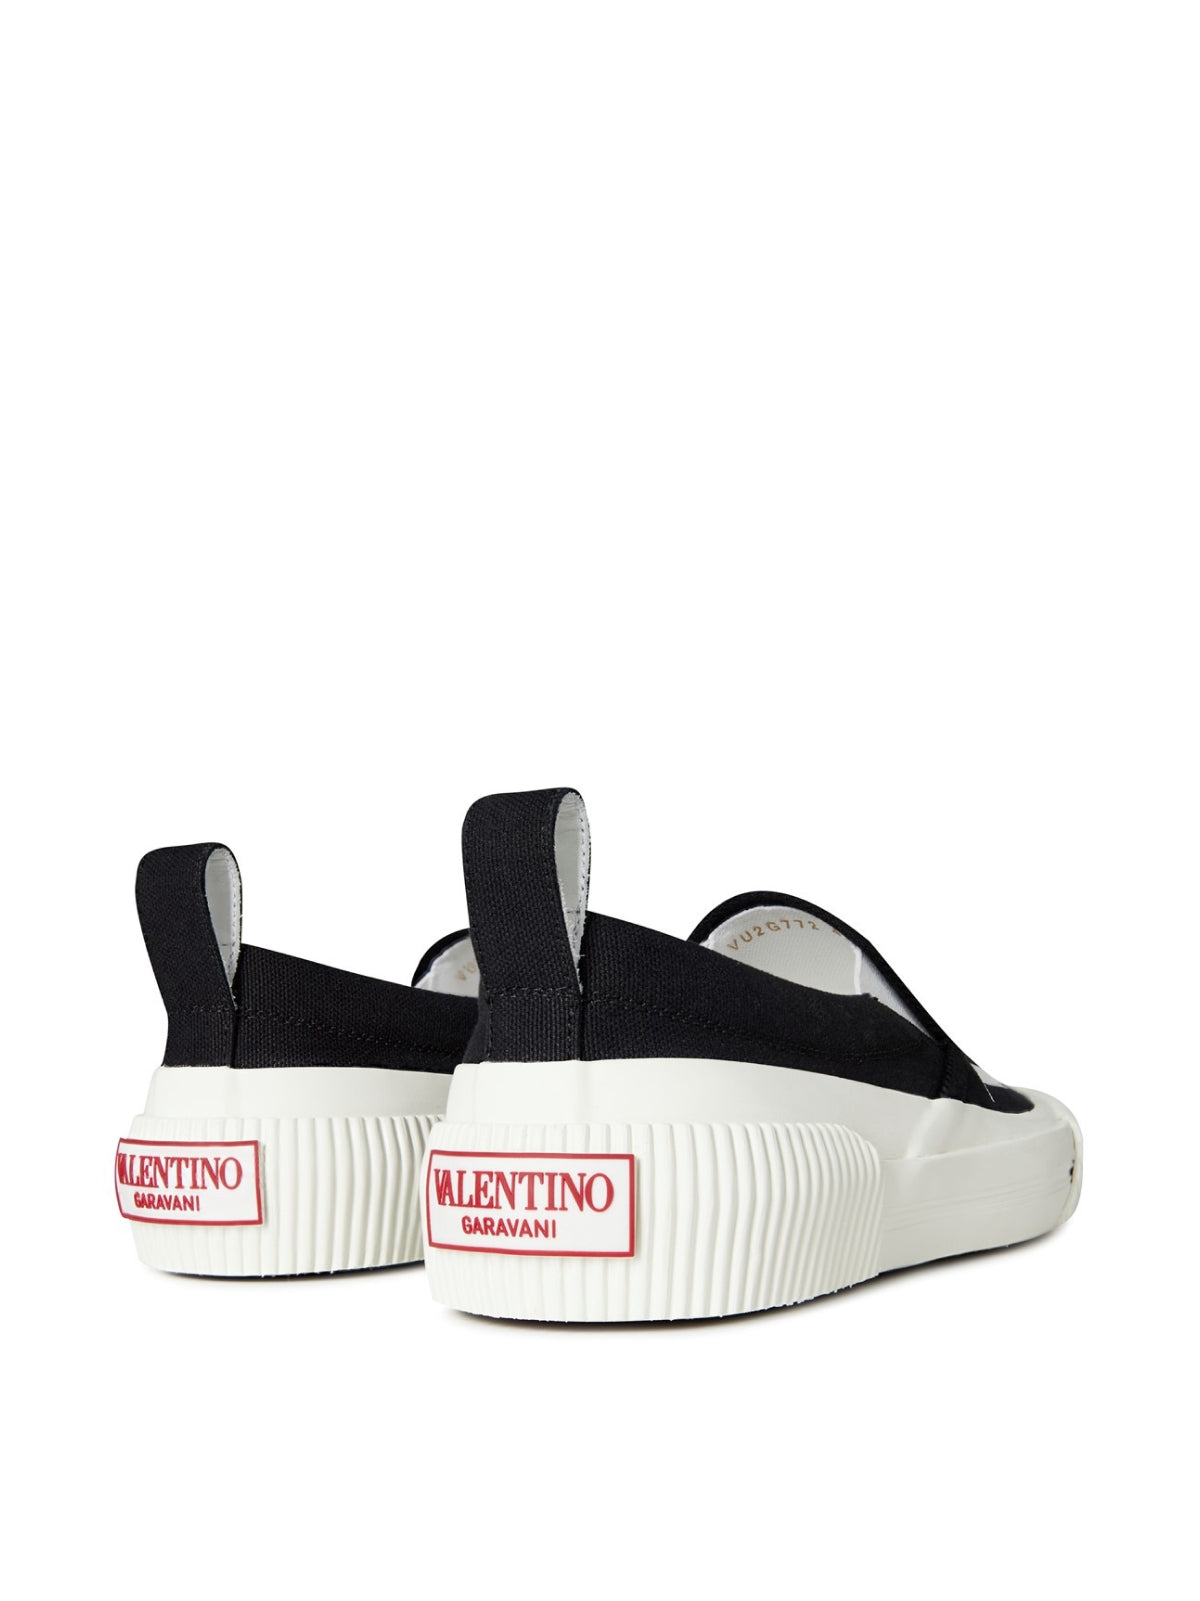 Valentino-OUTLET-SALE-VLTN Logo Slip on Sneakers-ARCHIVIST